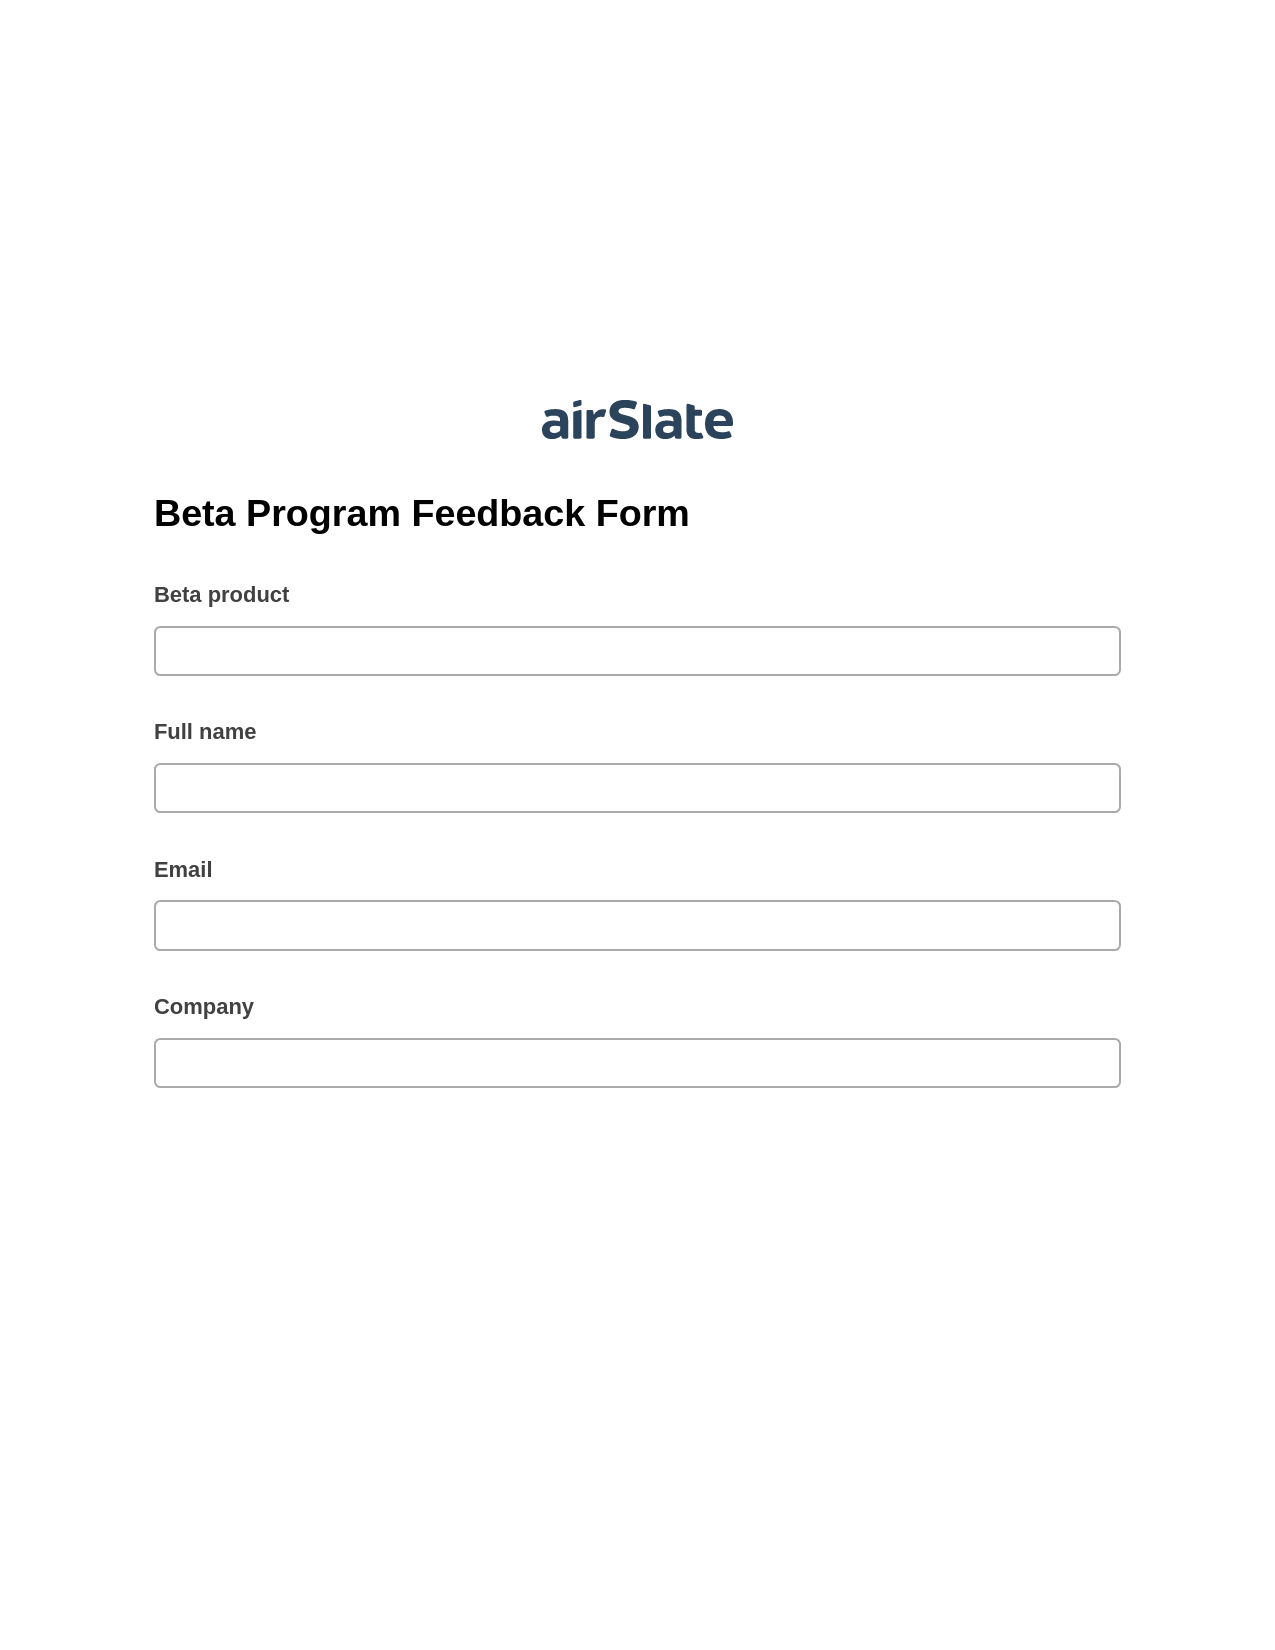 Beta Program Feedback Form Pre-fill from another Slate Bot, Remove Slate Bot, Webhook Postfinish Bot